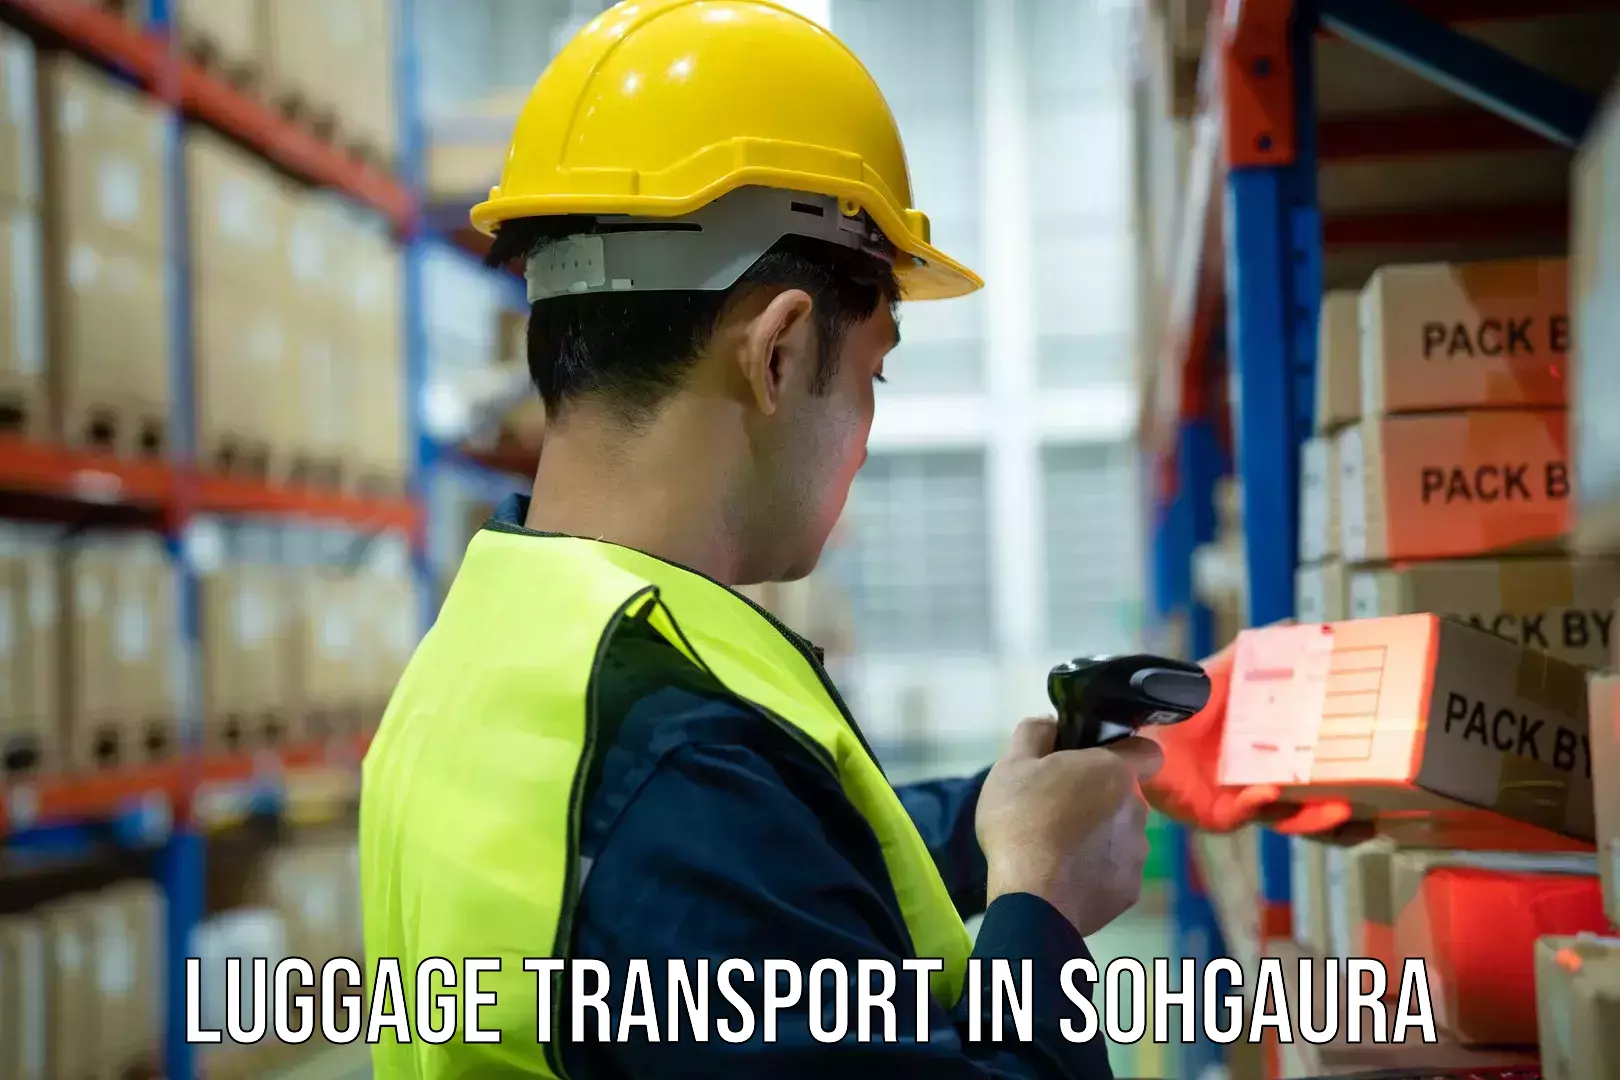 Baggage transport network in Sohgaura